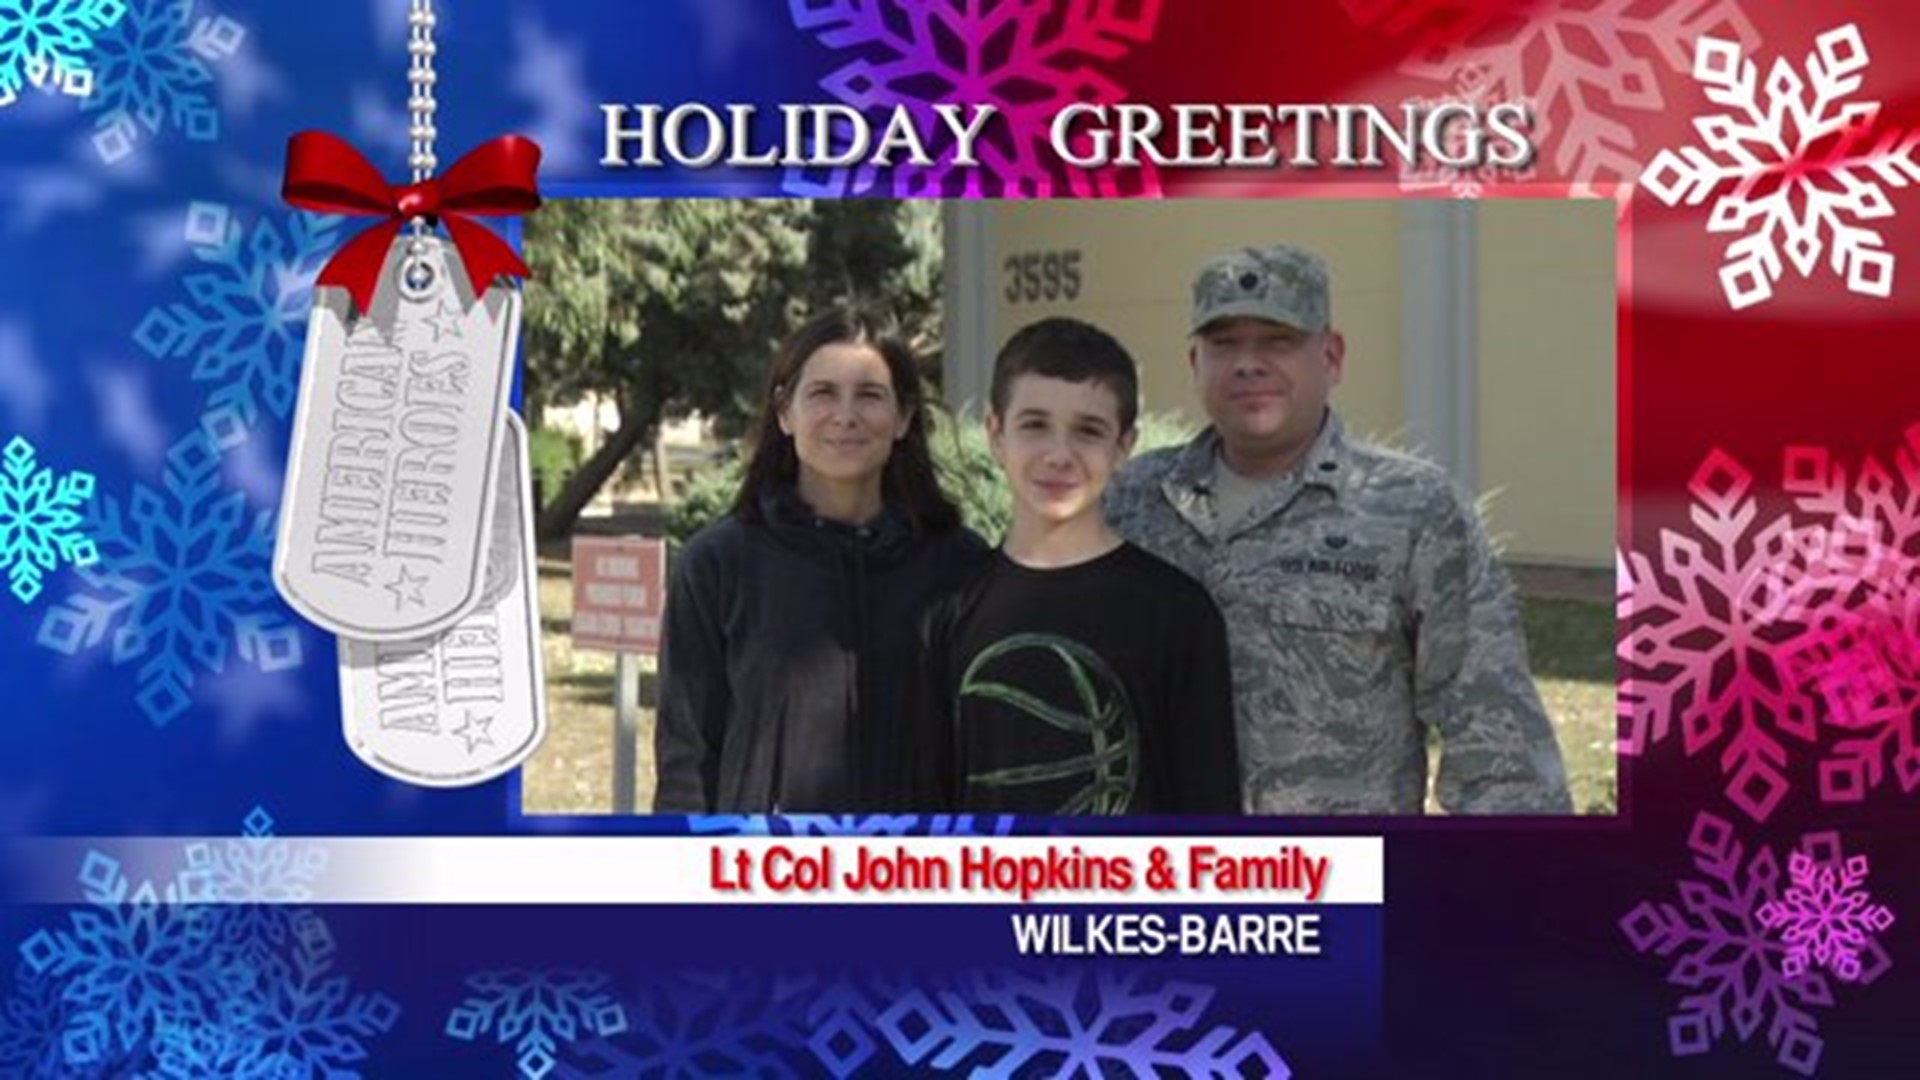 Military Greeting: Lt Col John Hopkins